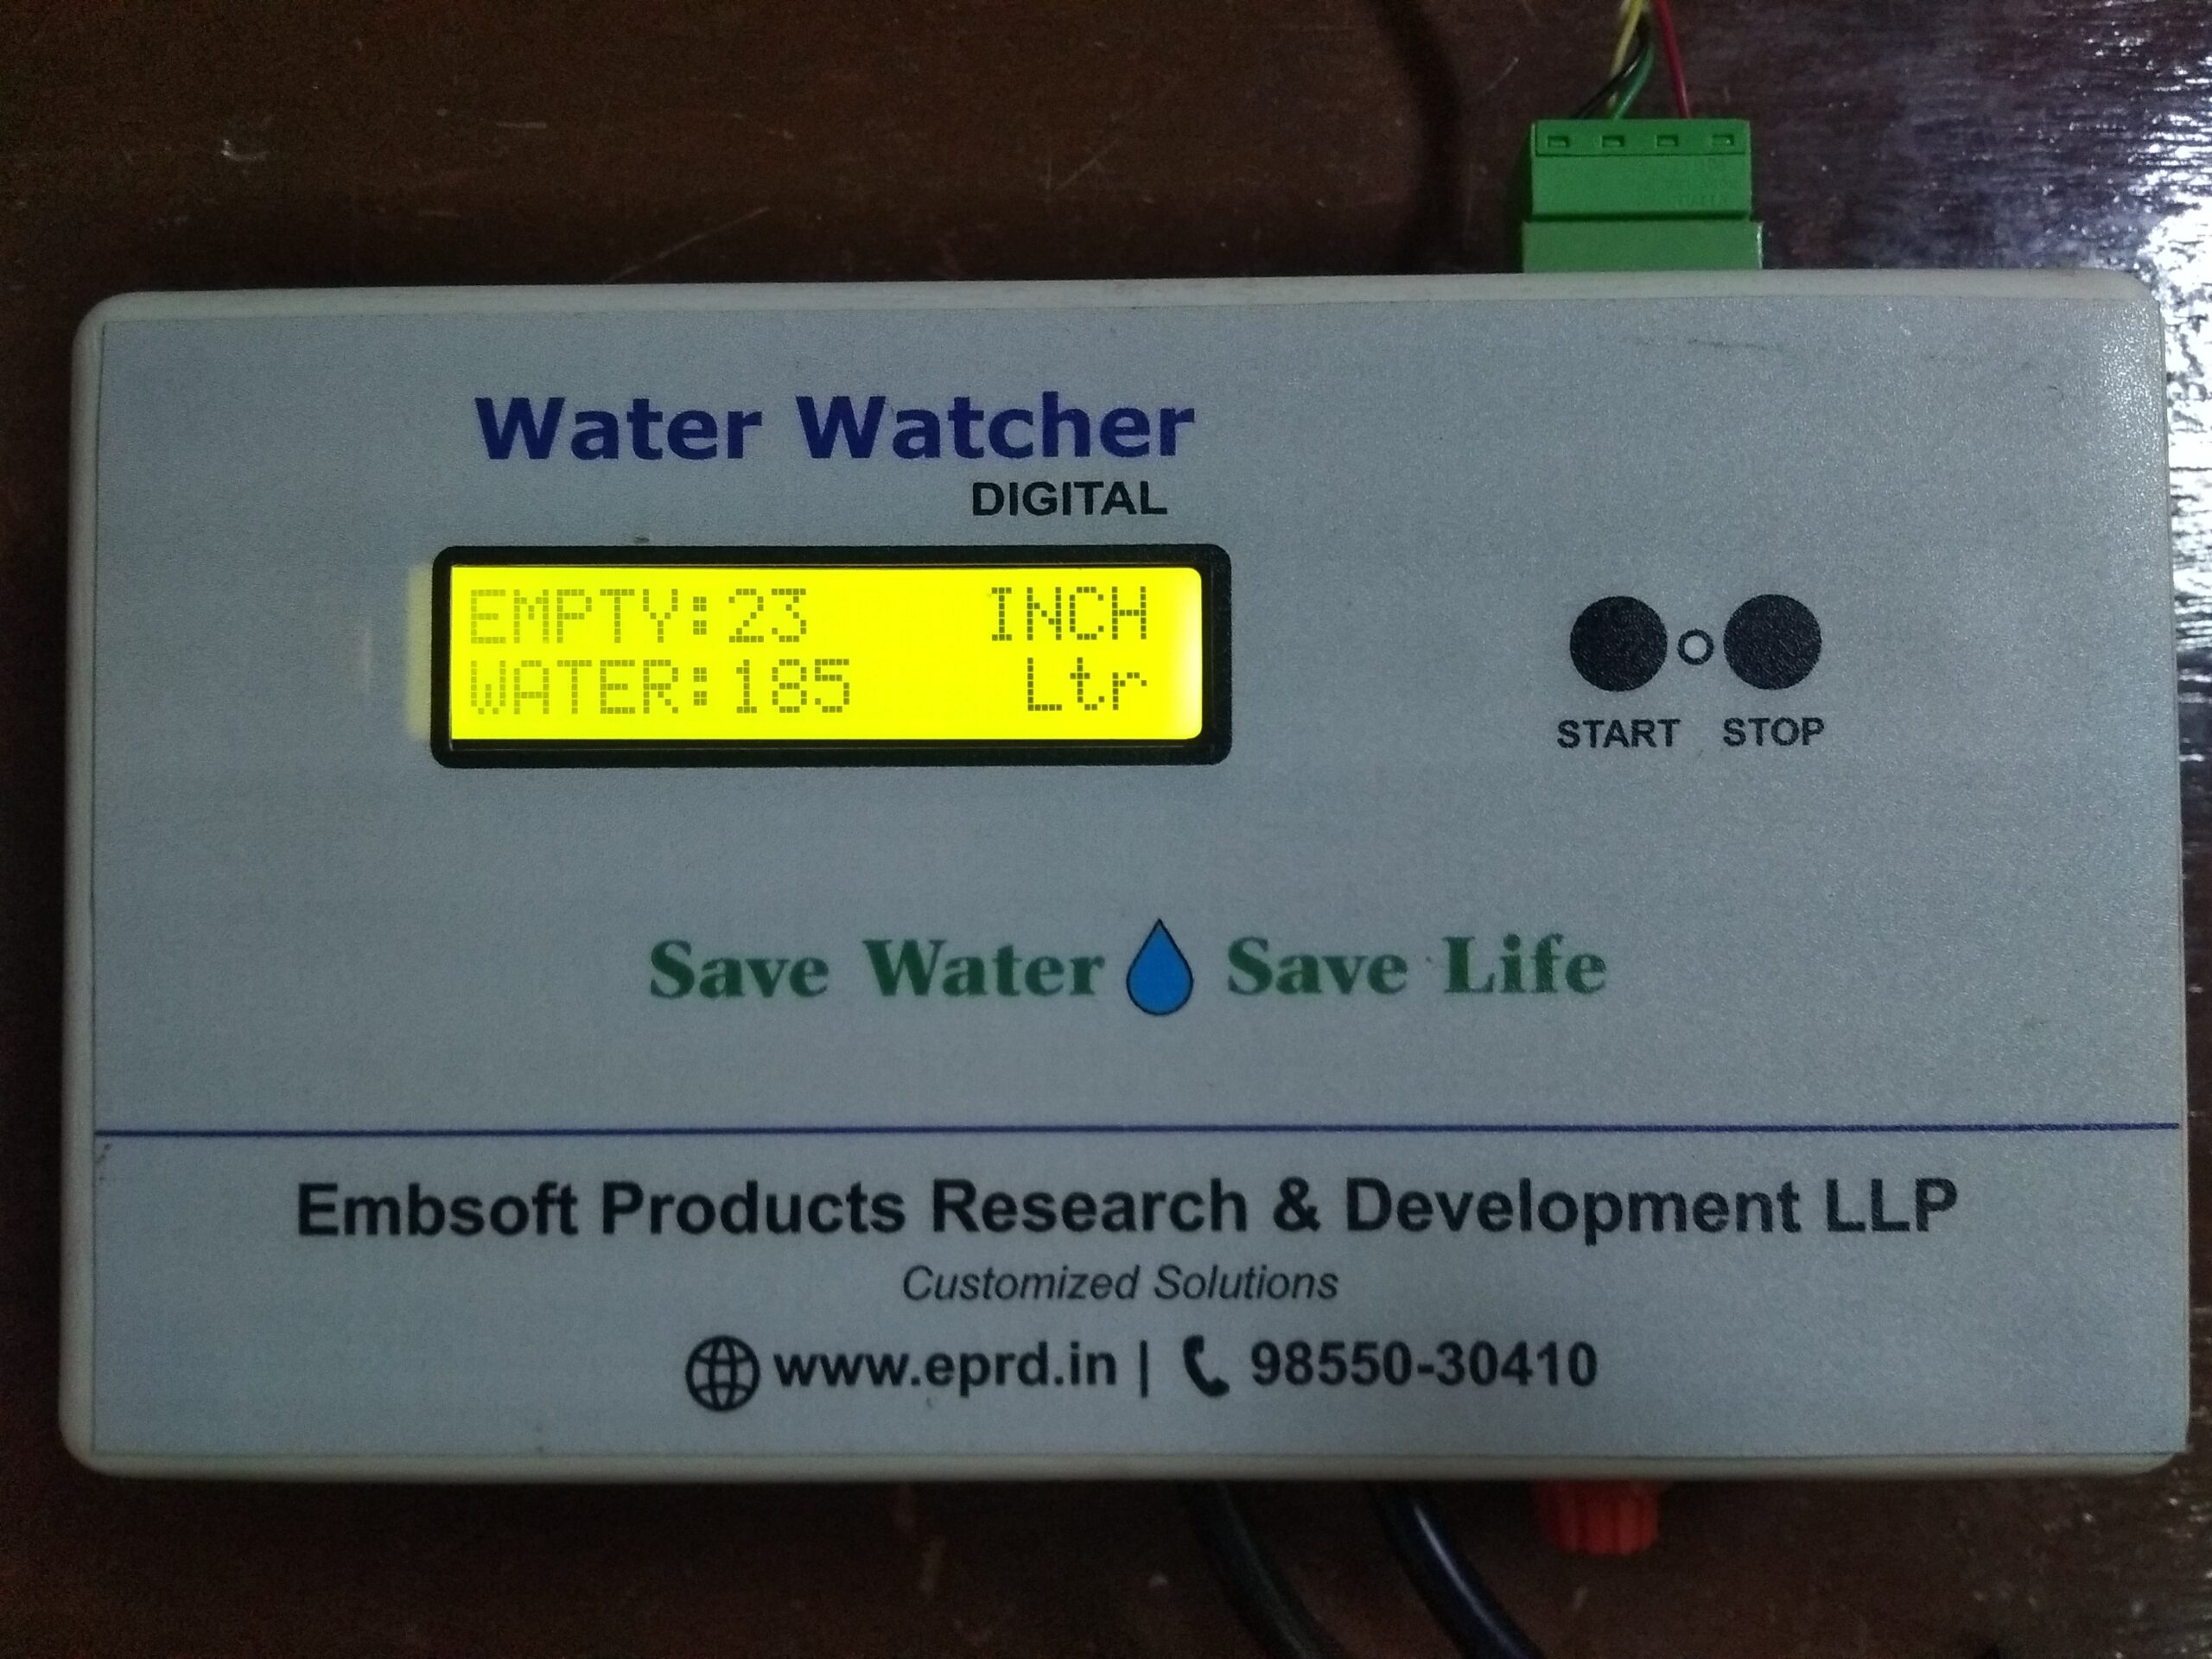 Water Watcher